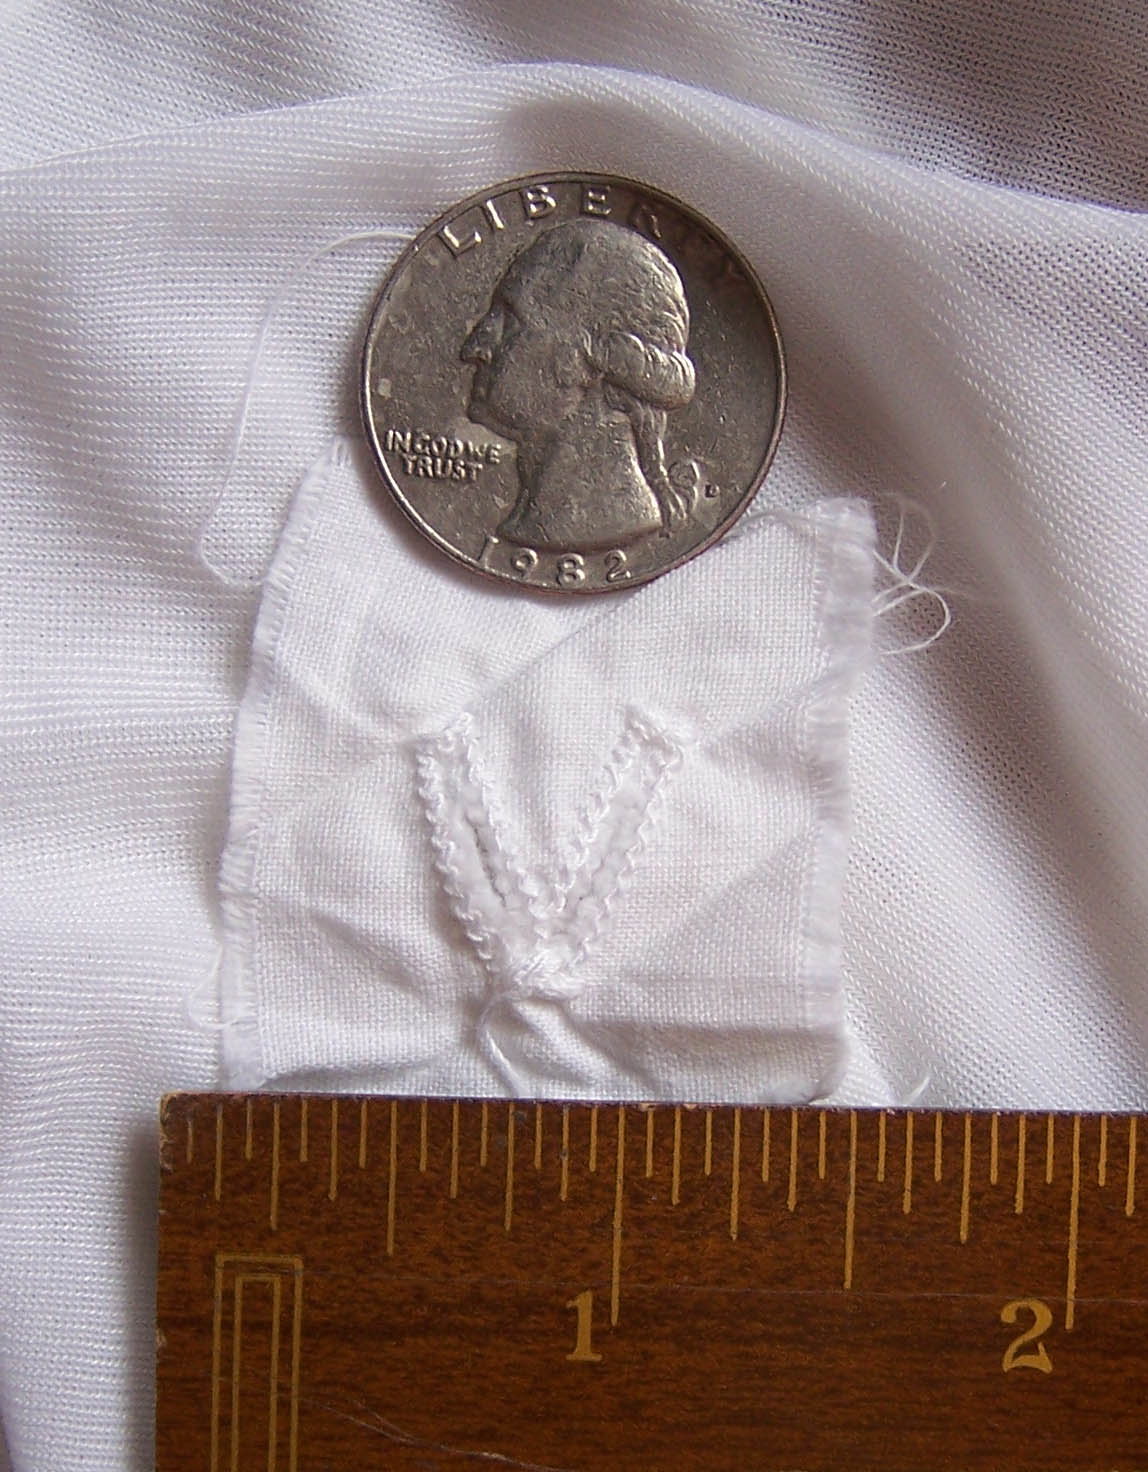 Mormon temple garment female compass marking inside stitching.